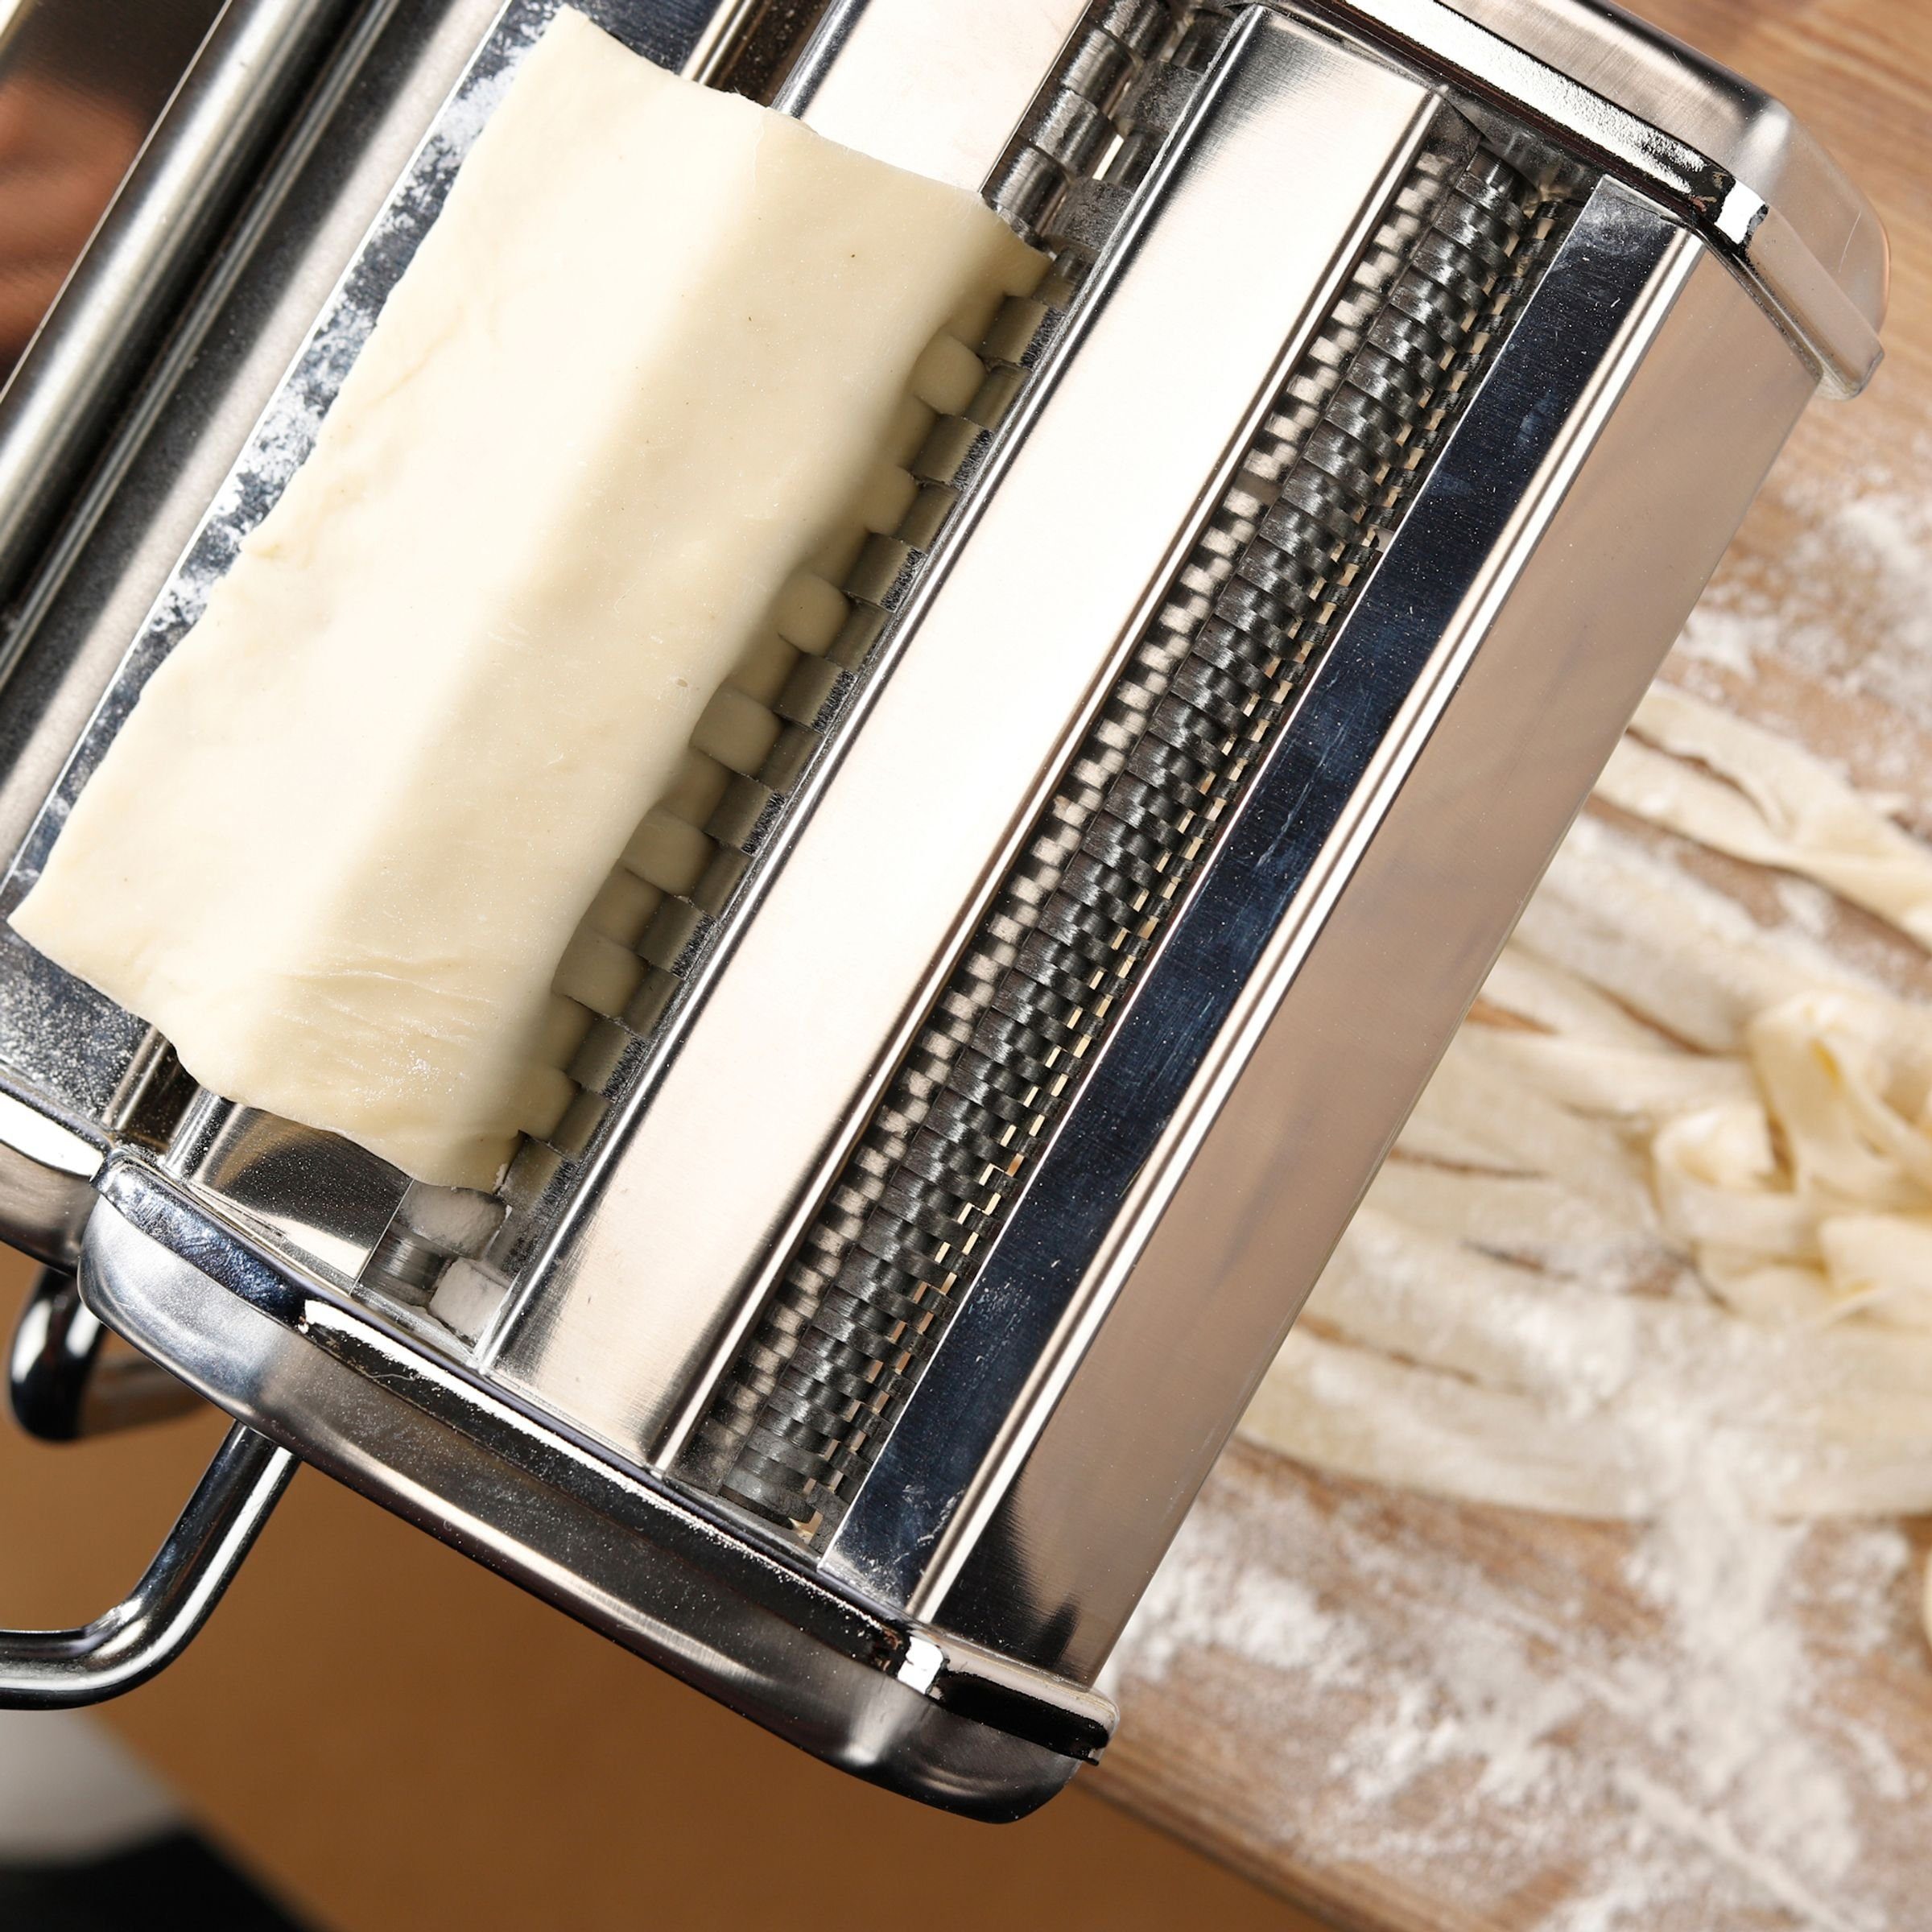 Nudelmaschine Pasta Nudelmaschine Edelstahl Tagliatelle Gravidus Maschine